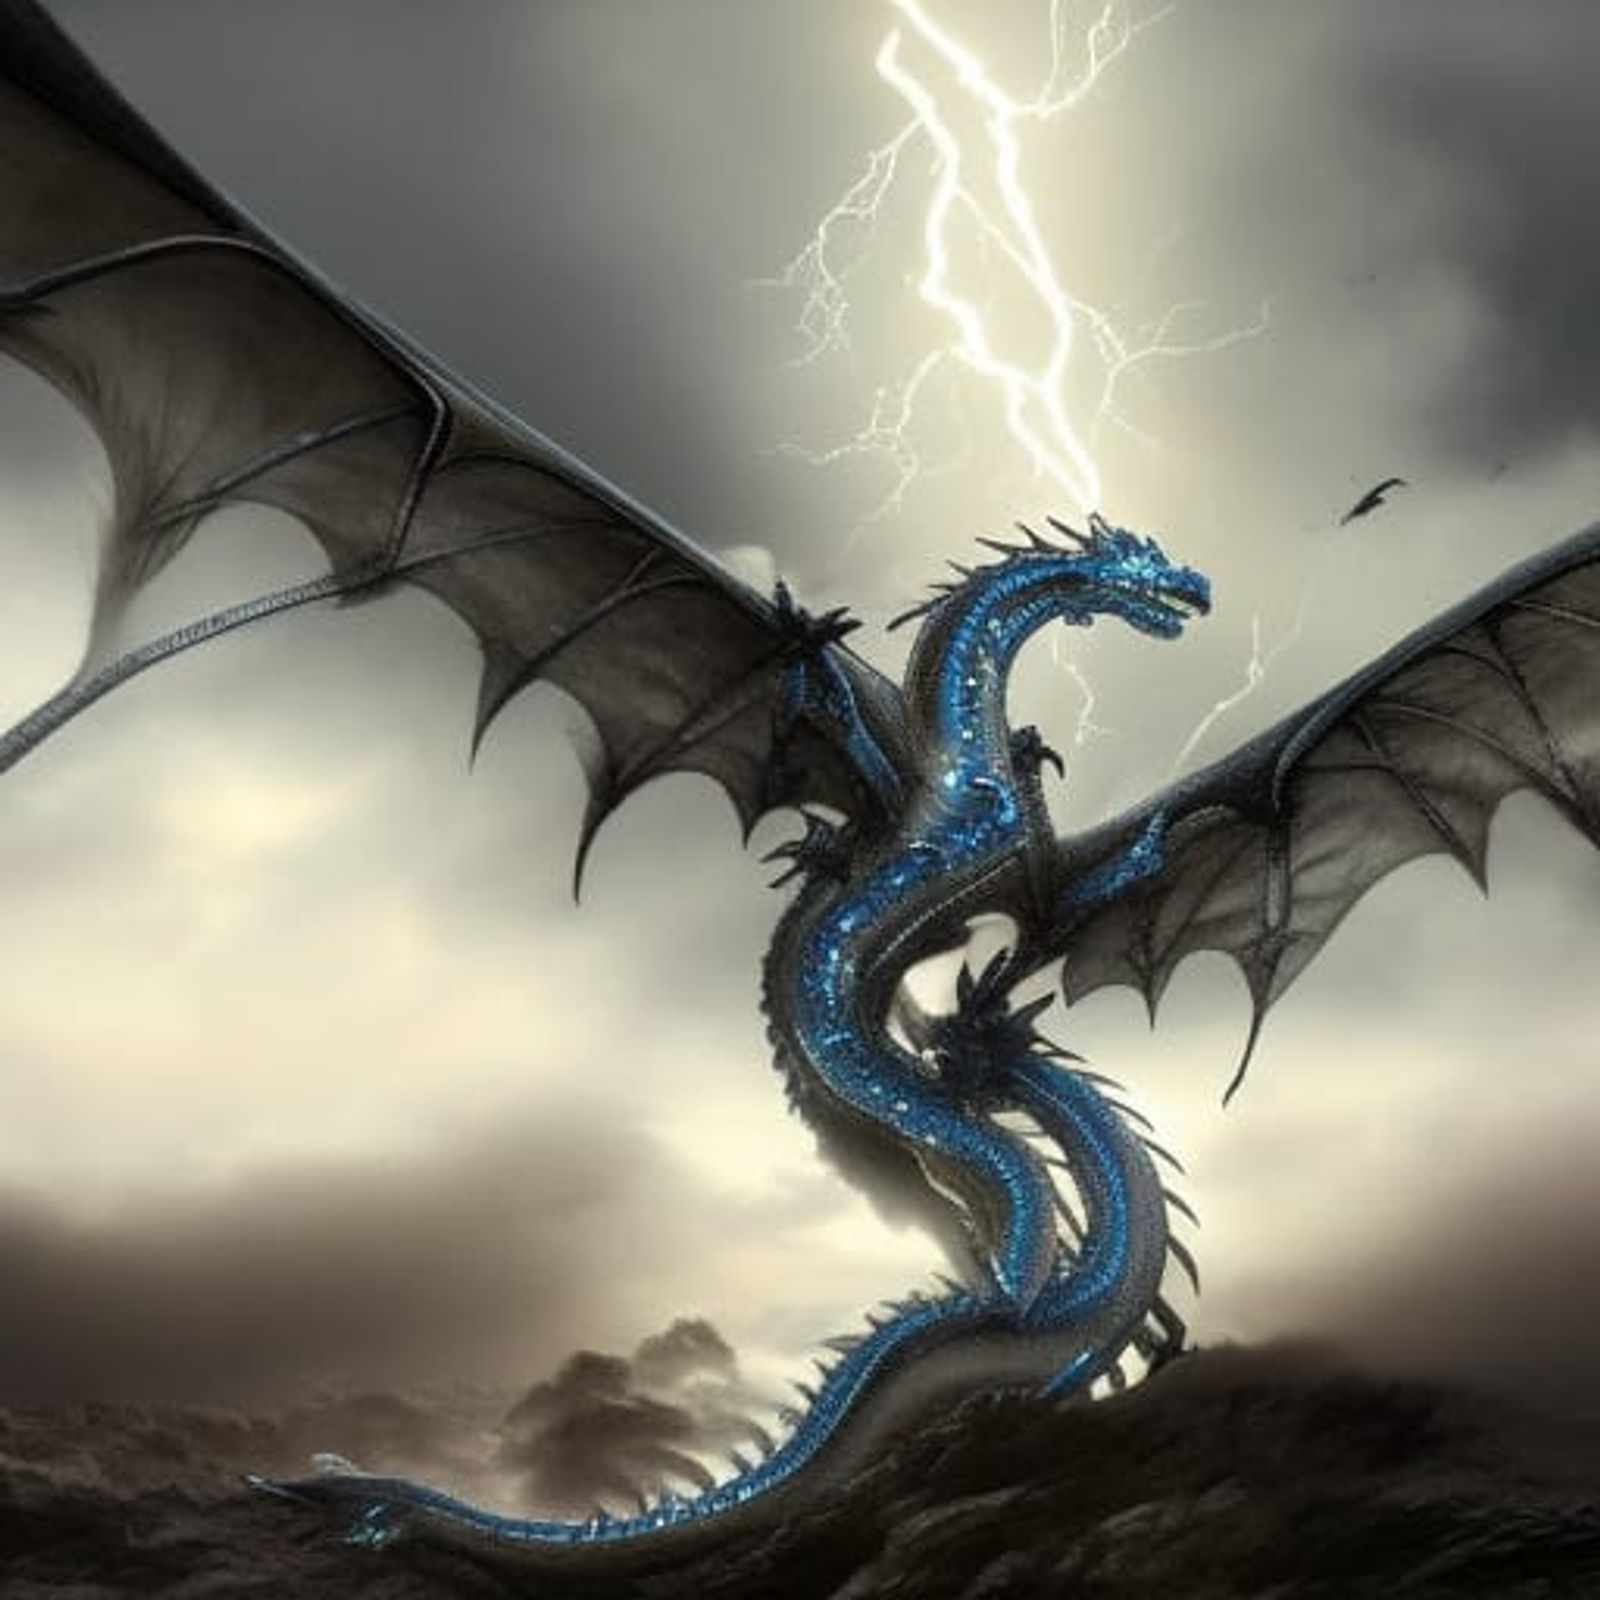 cool lightning dragons